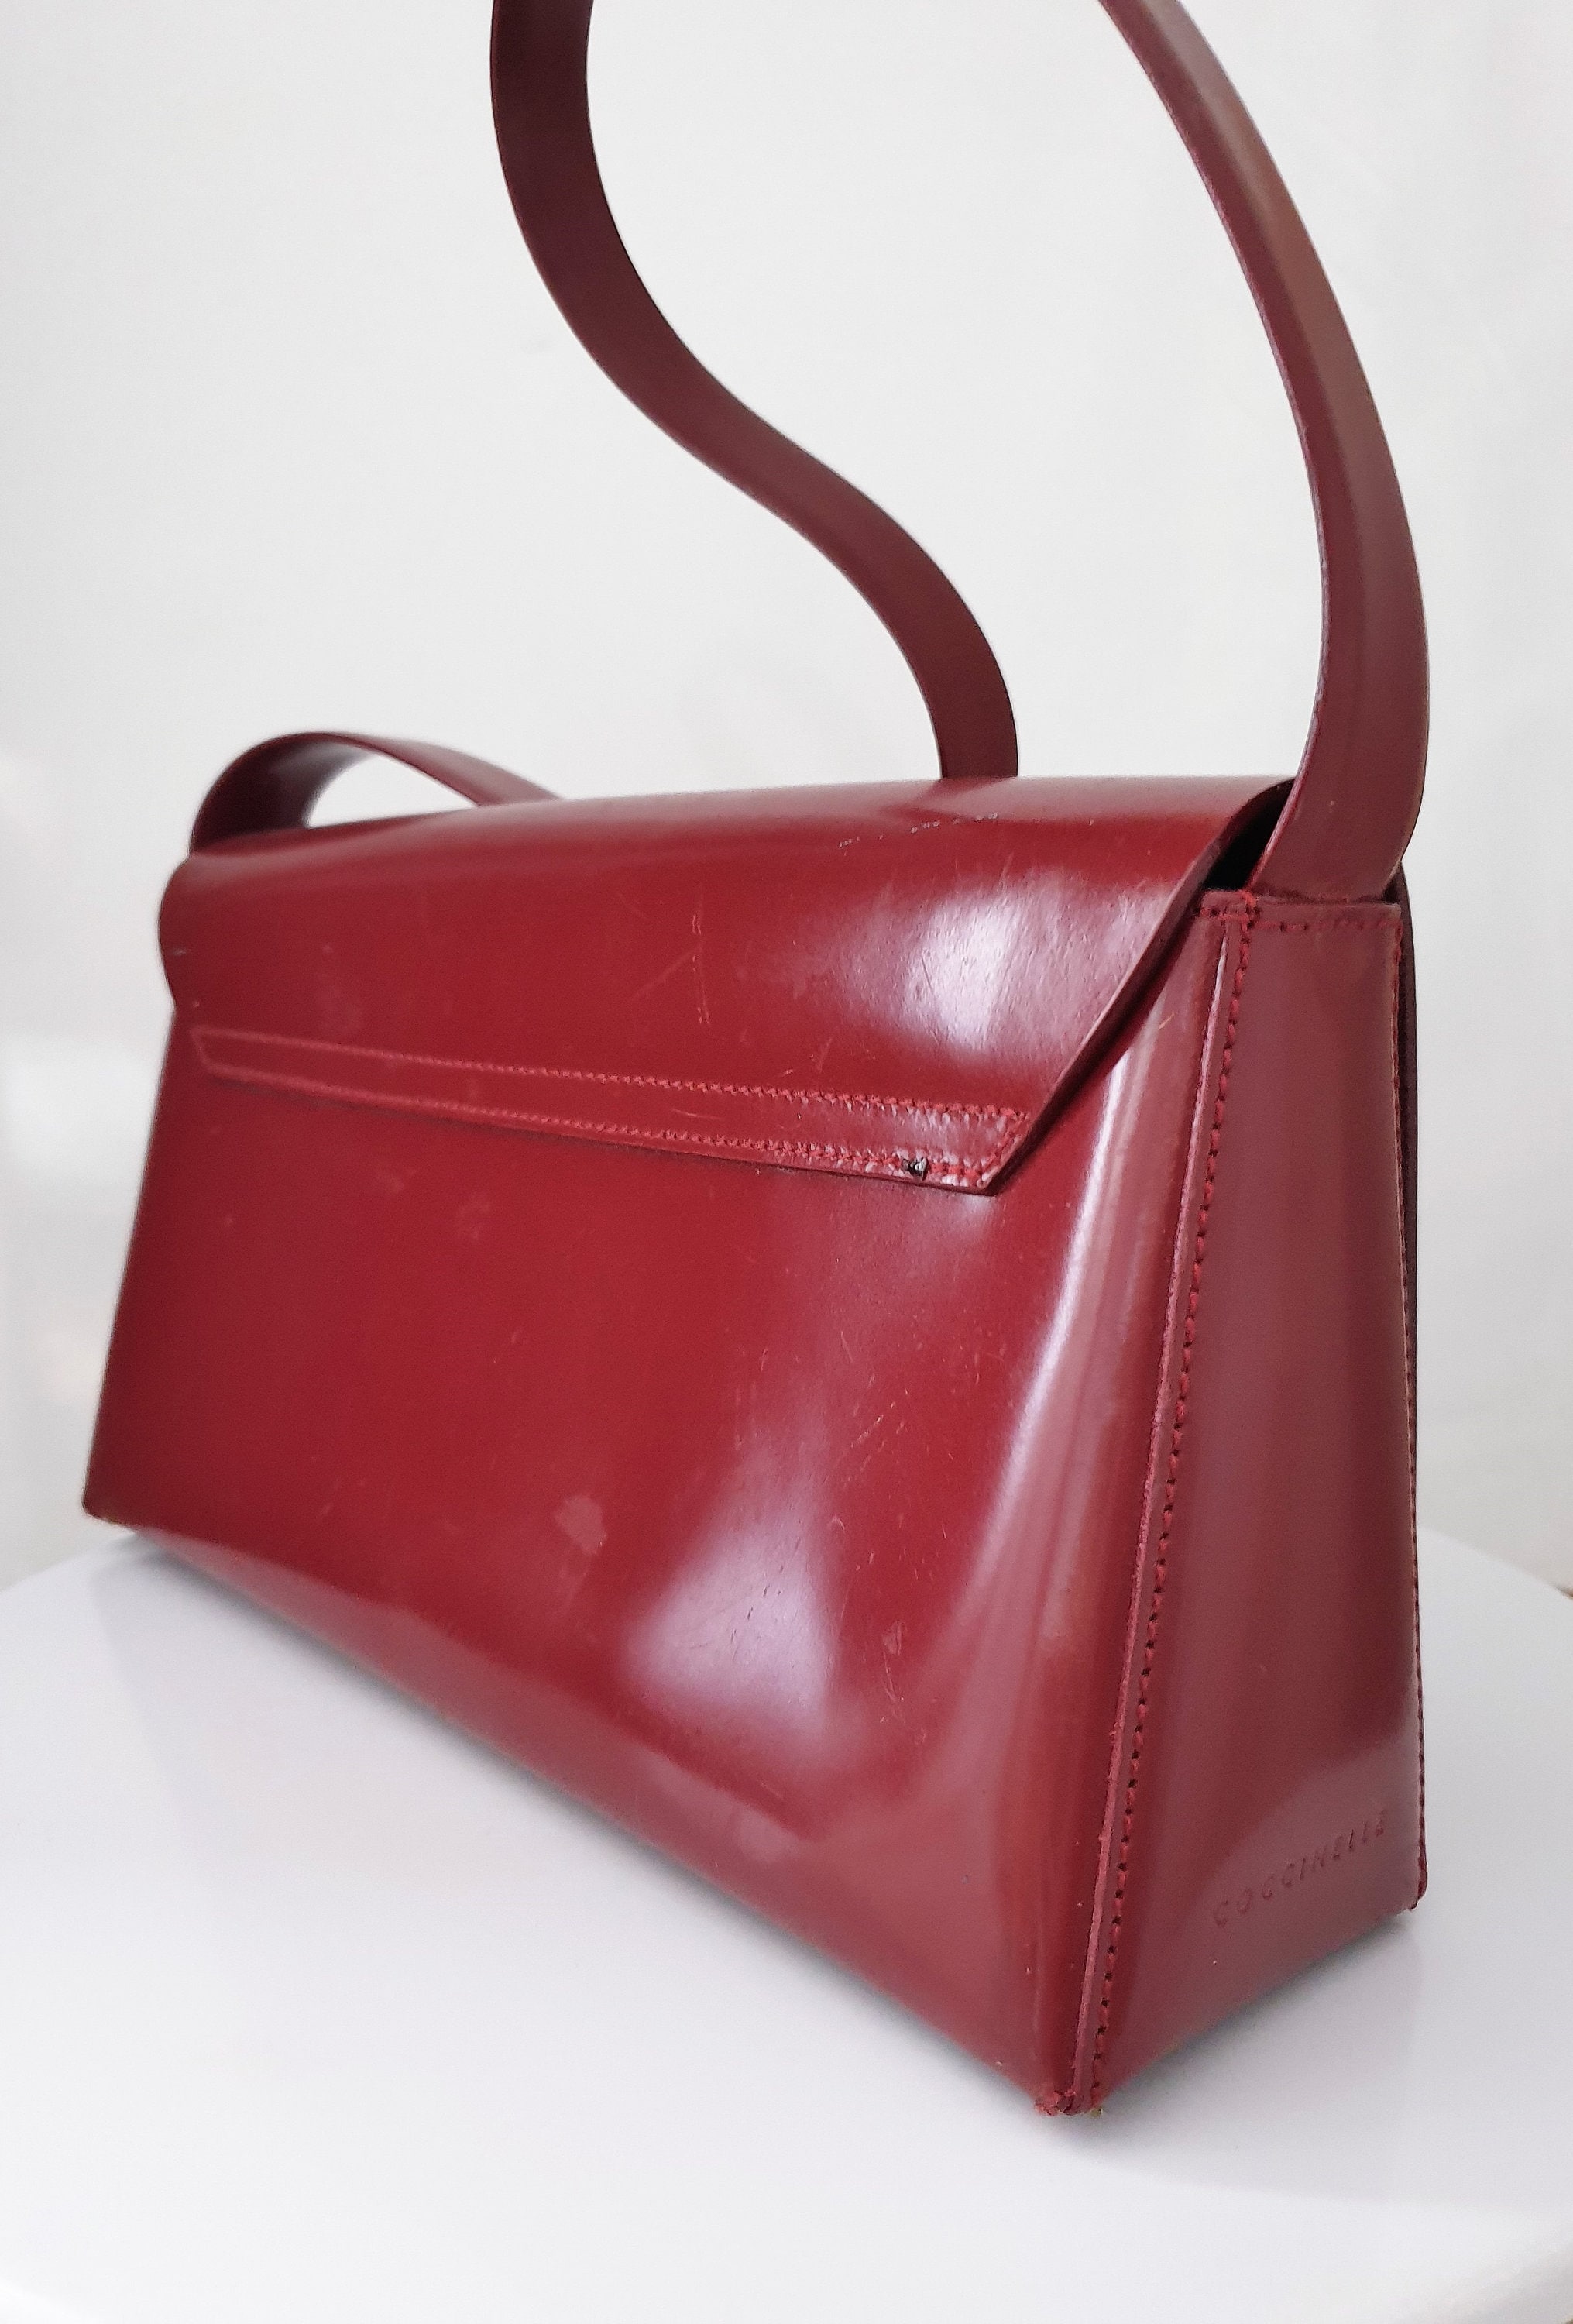 Vintage Coccinelle Red Leather Women Shoulder Handmade Bag, Italian Made Bag  for Women,nos Bag,italian Cognac Bag - Etsy